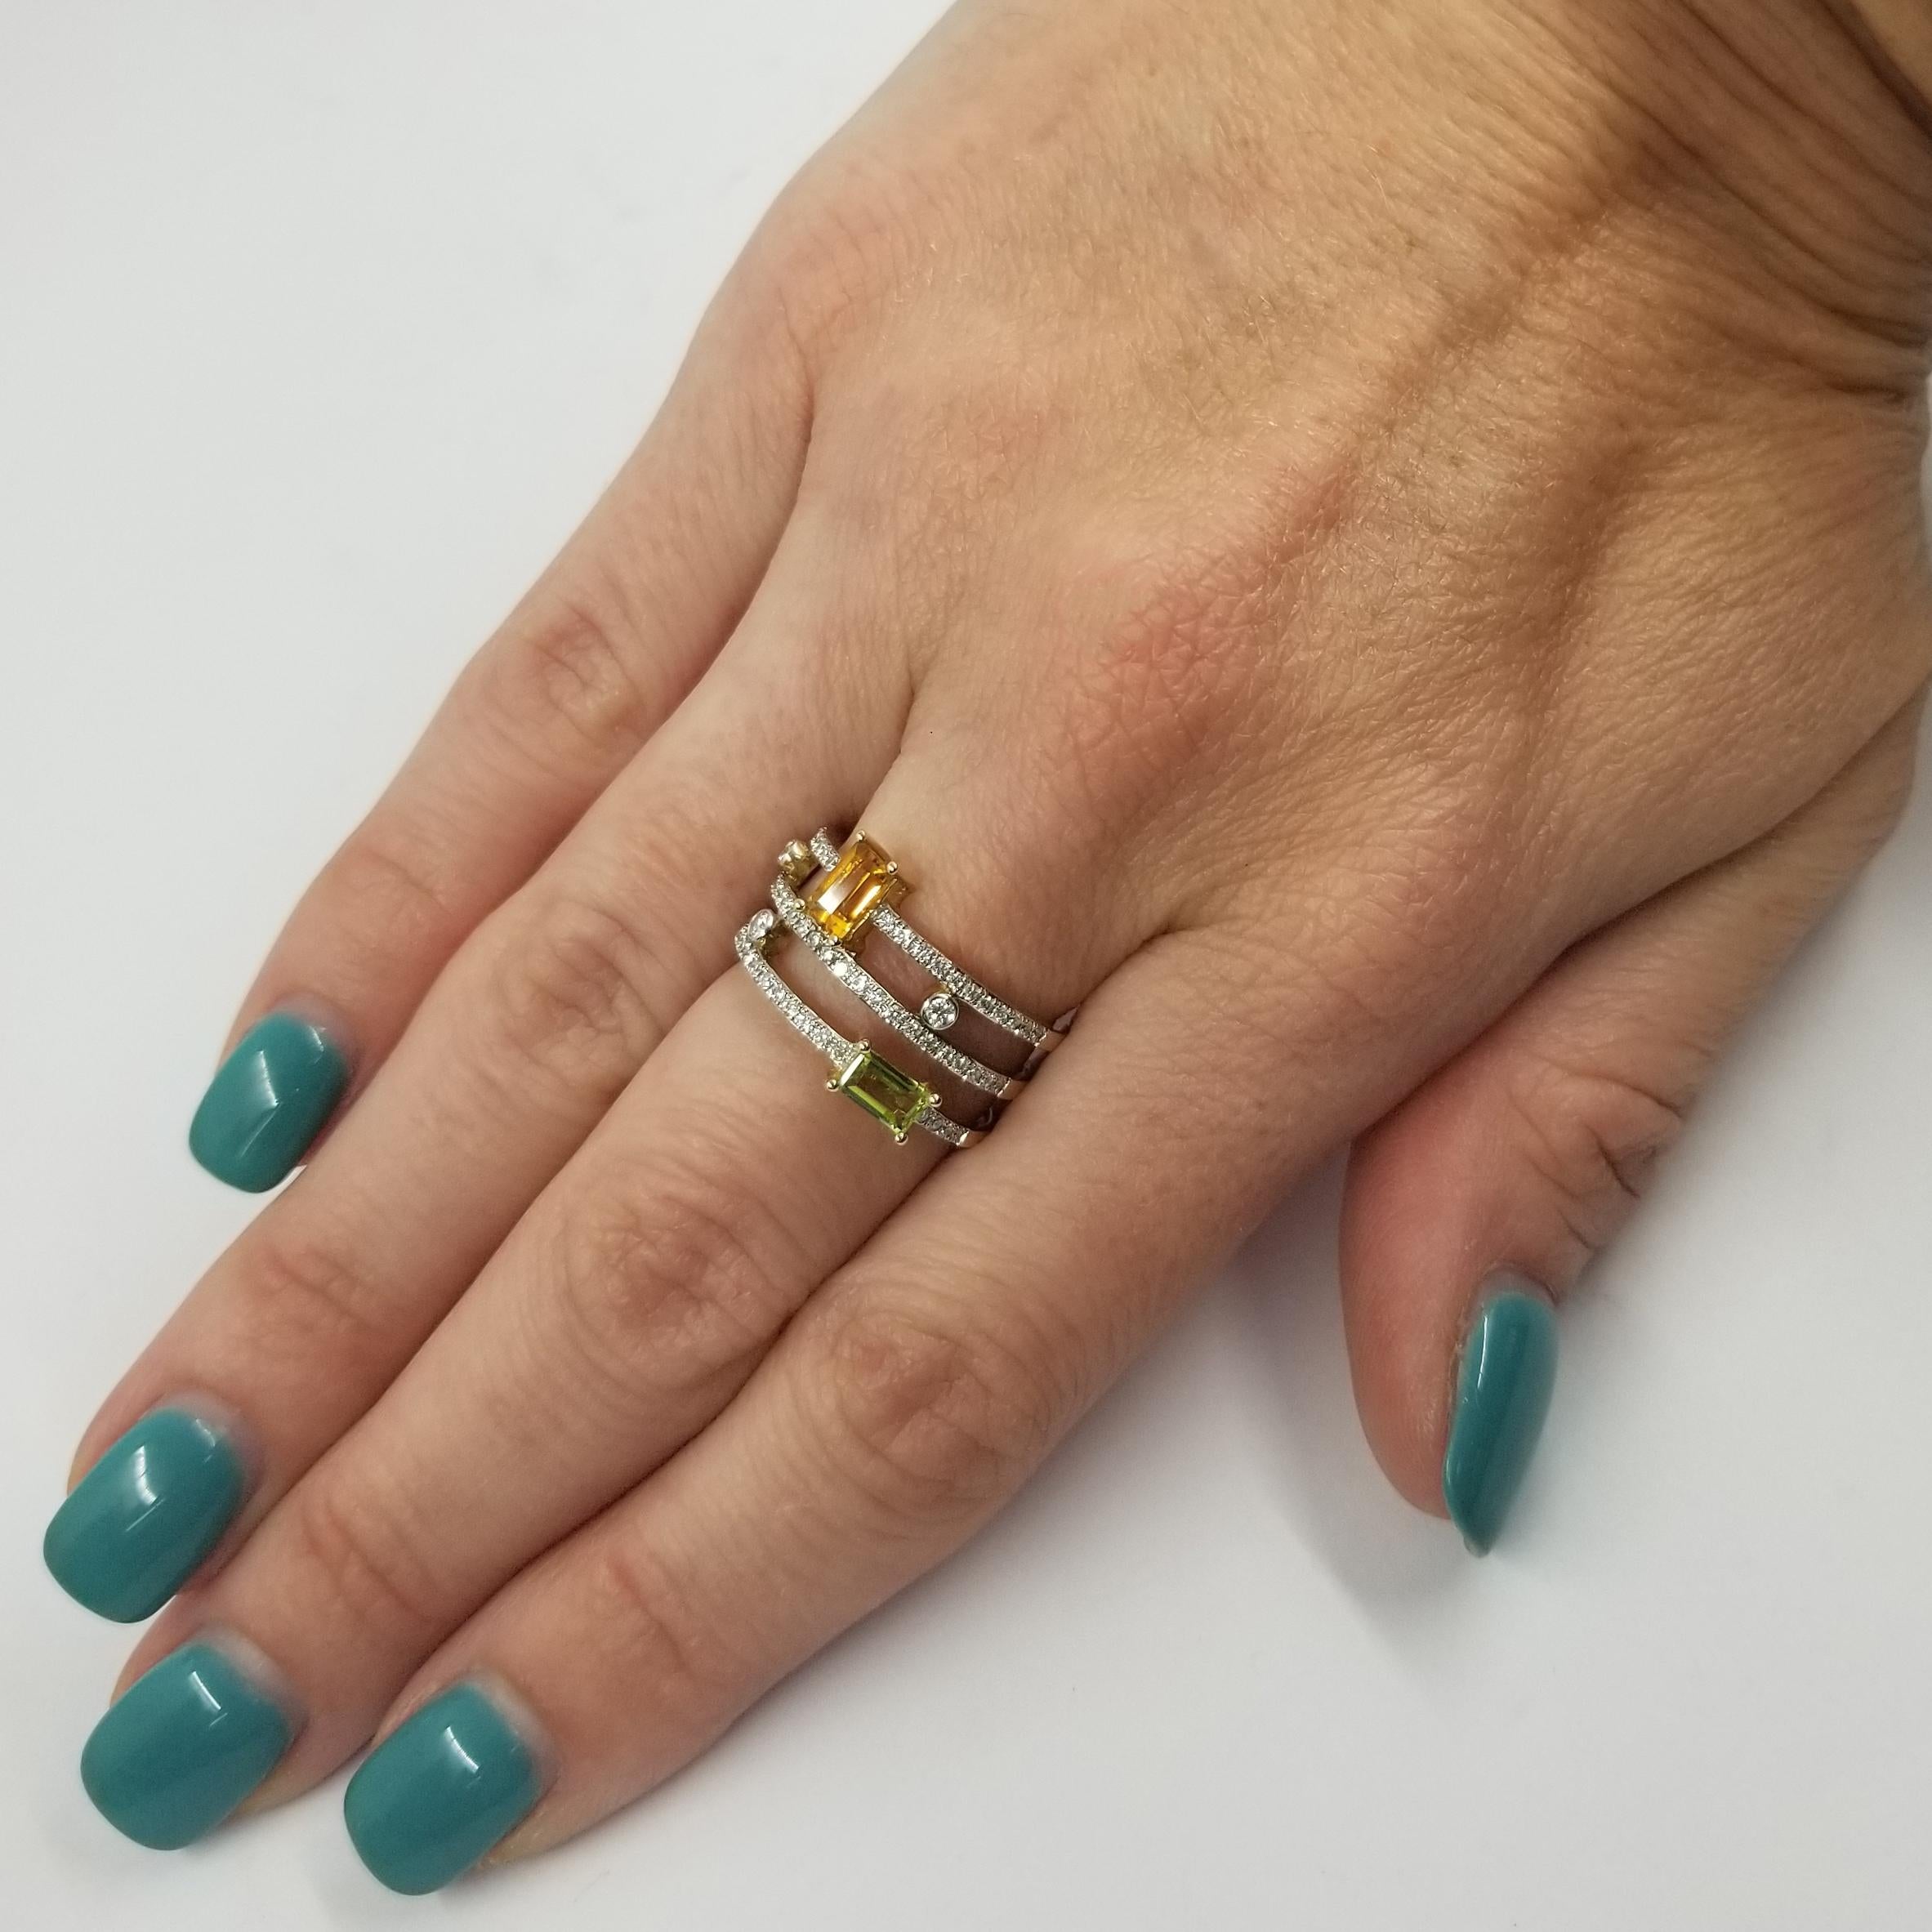 14 Karat Yellow Gold Fashion Ring From Madison L. Featuring A 0.31 Carat Emerald Cut Peridot, A 0.33 Carat Emerald Cut Citrine, & 60 Round Diamonds Totaling 0.33 Carats. Finger Size 6.5.